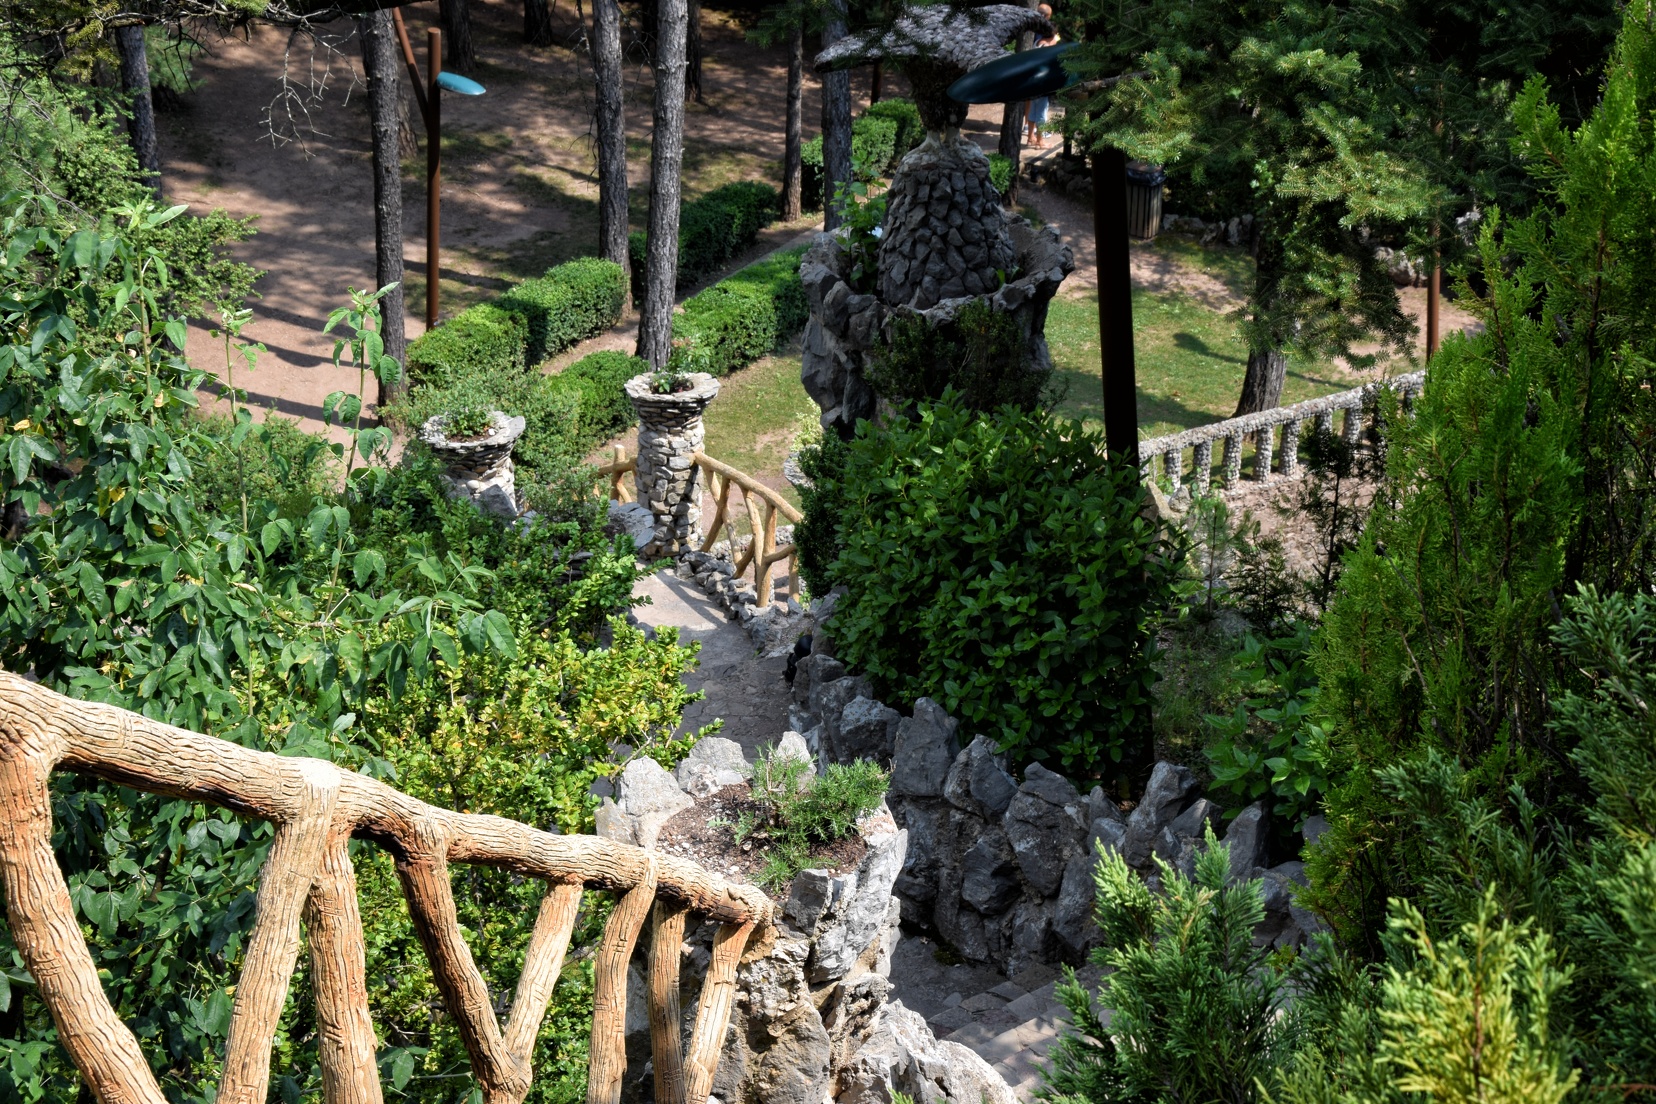 Les jardins discrets d’Antoni Gaudí